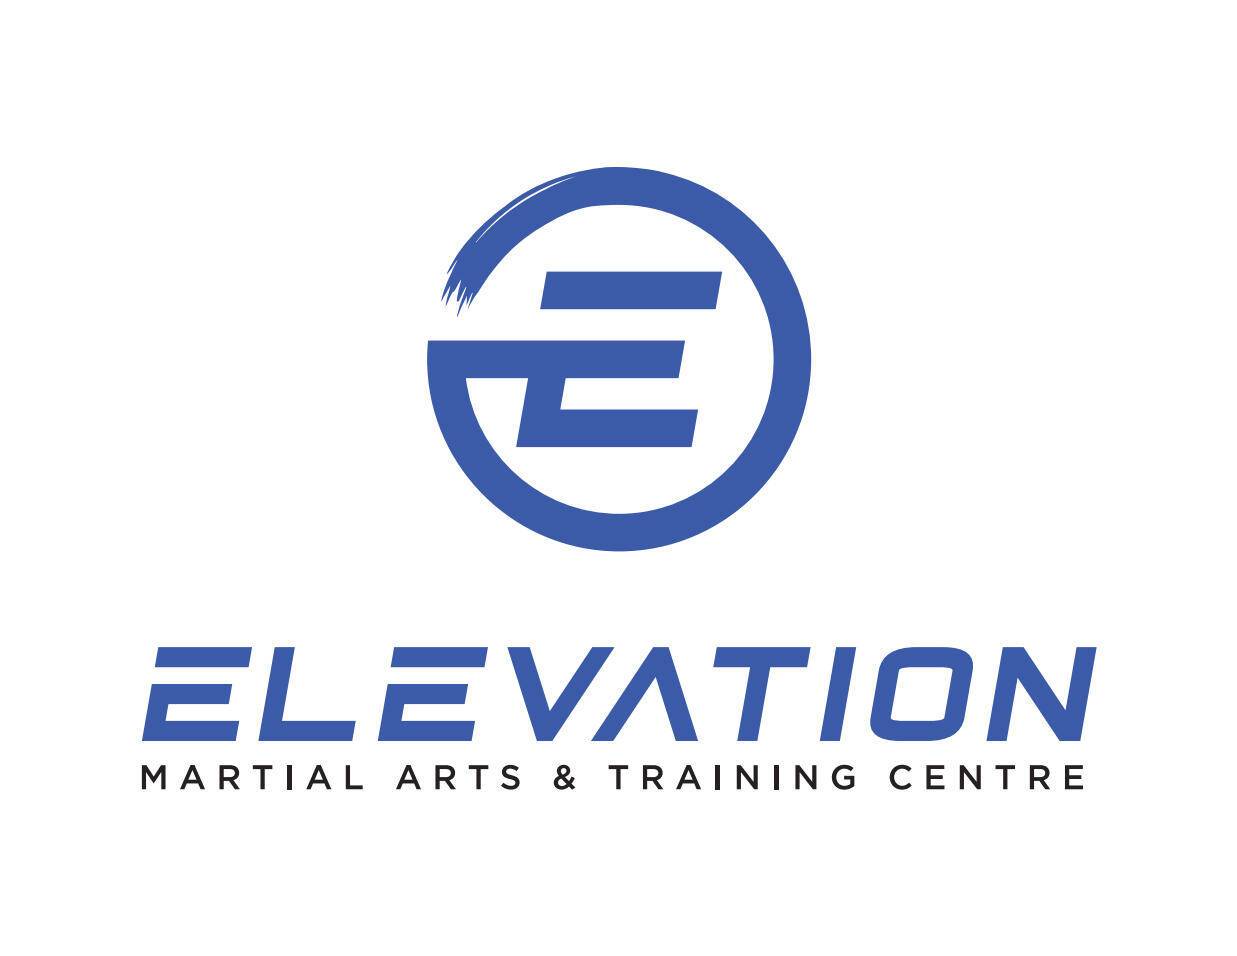 Elevation Martial Arts